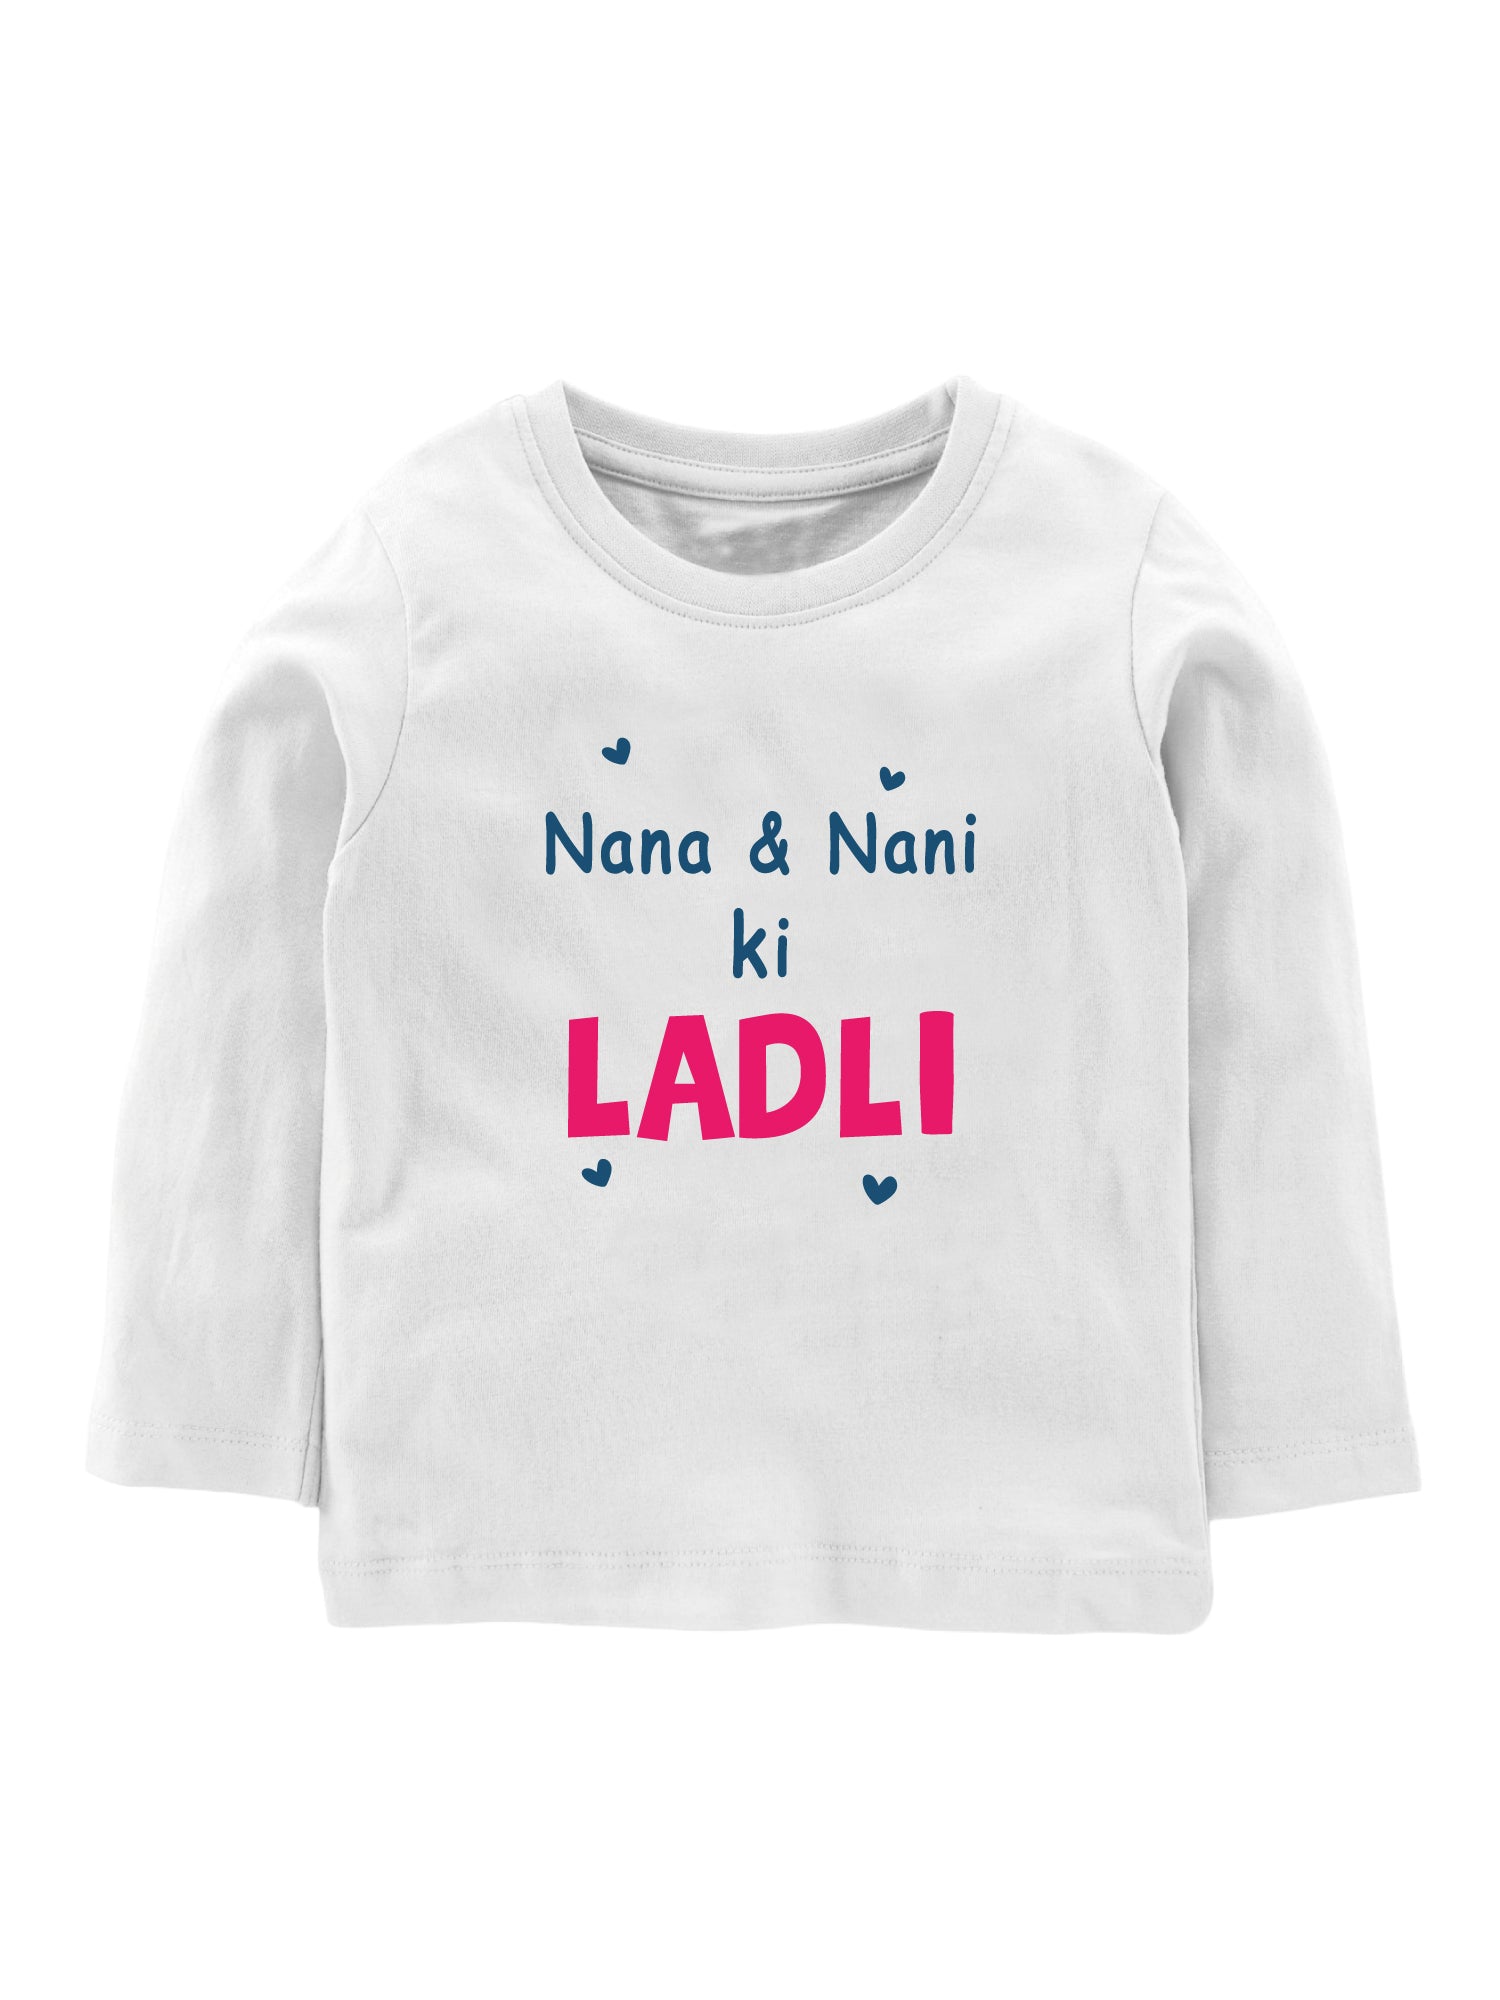 Nana and Nani Ki Ladli - Tee